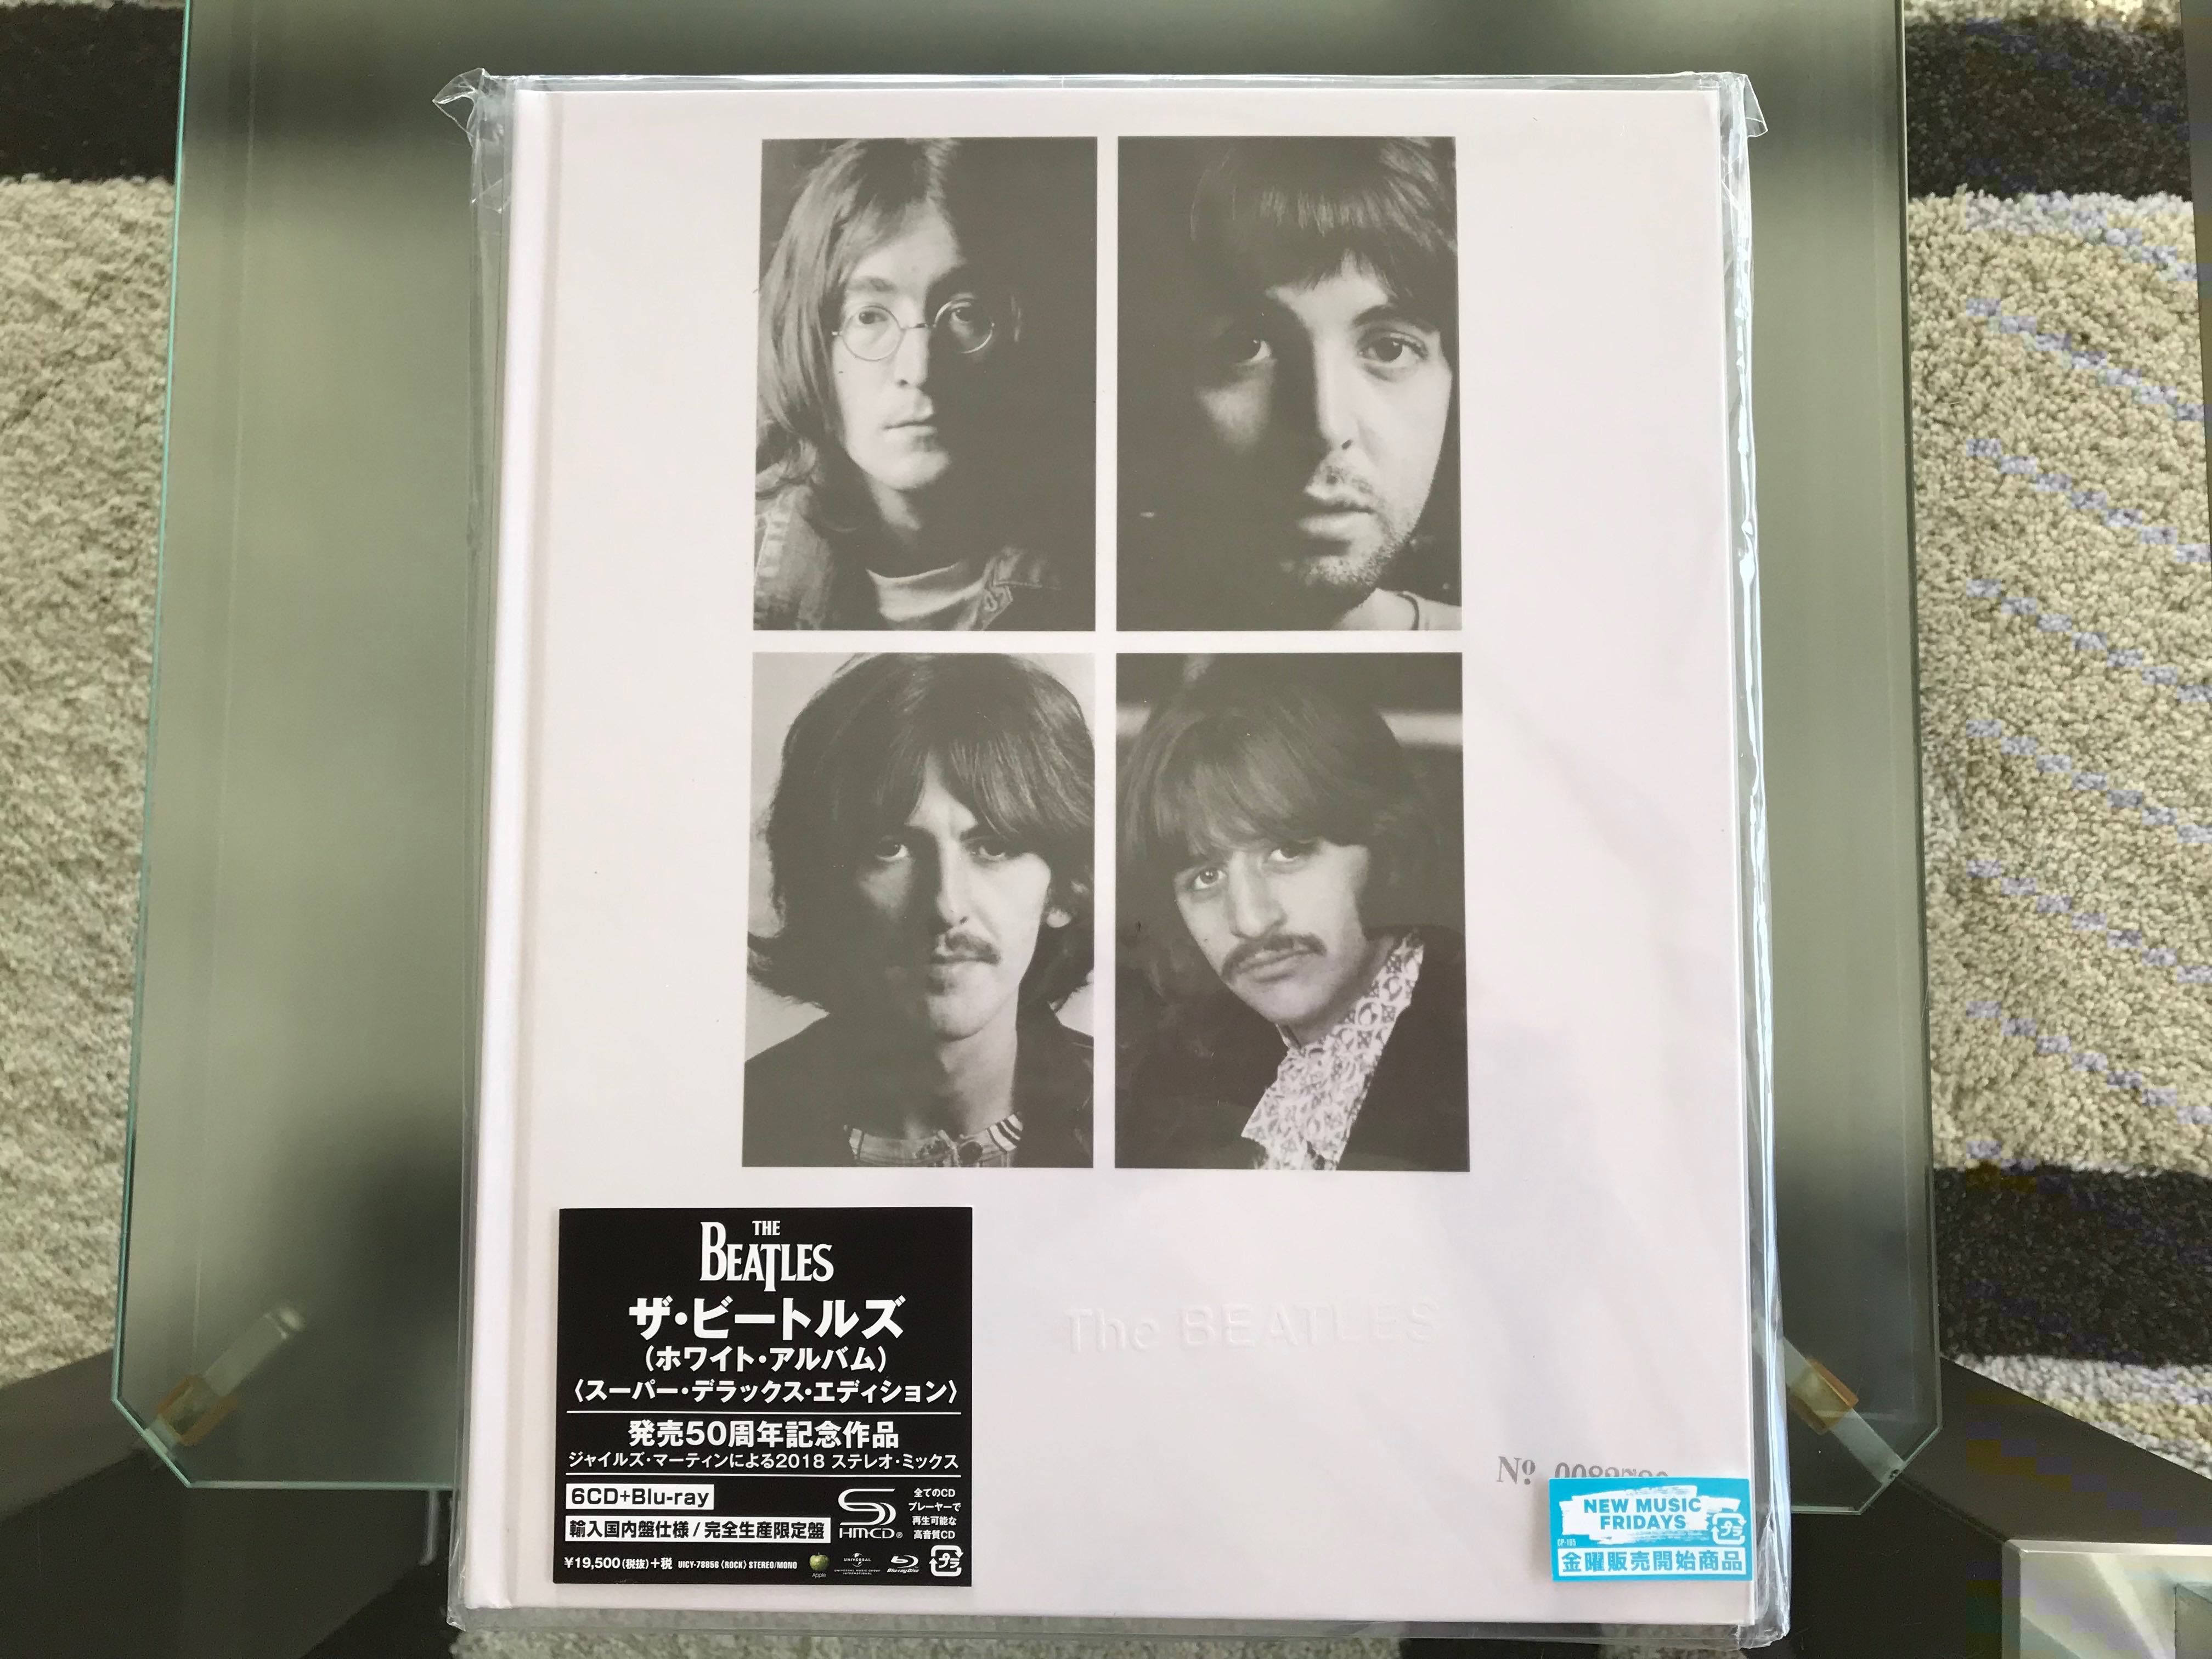 The Beatles - LOGIC他力本願寺